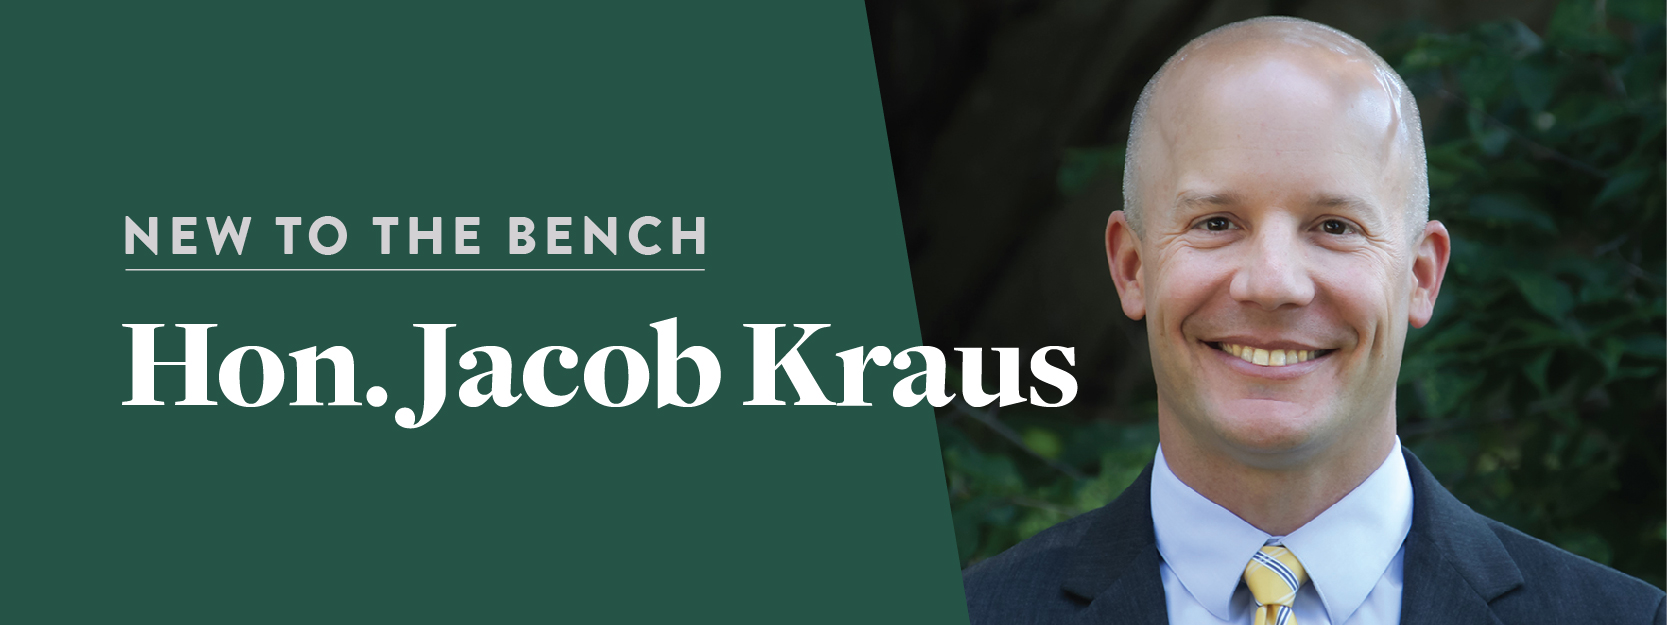 New to the Bench: Hon. Jacob Kraus